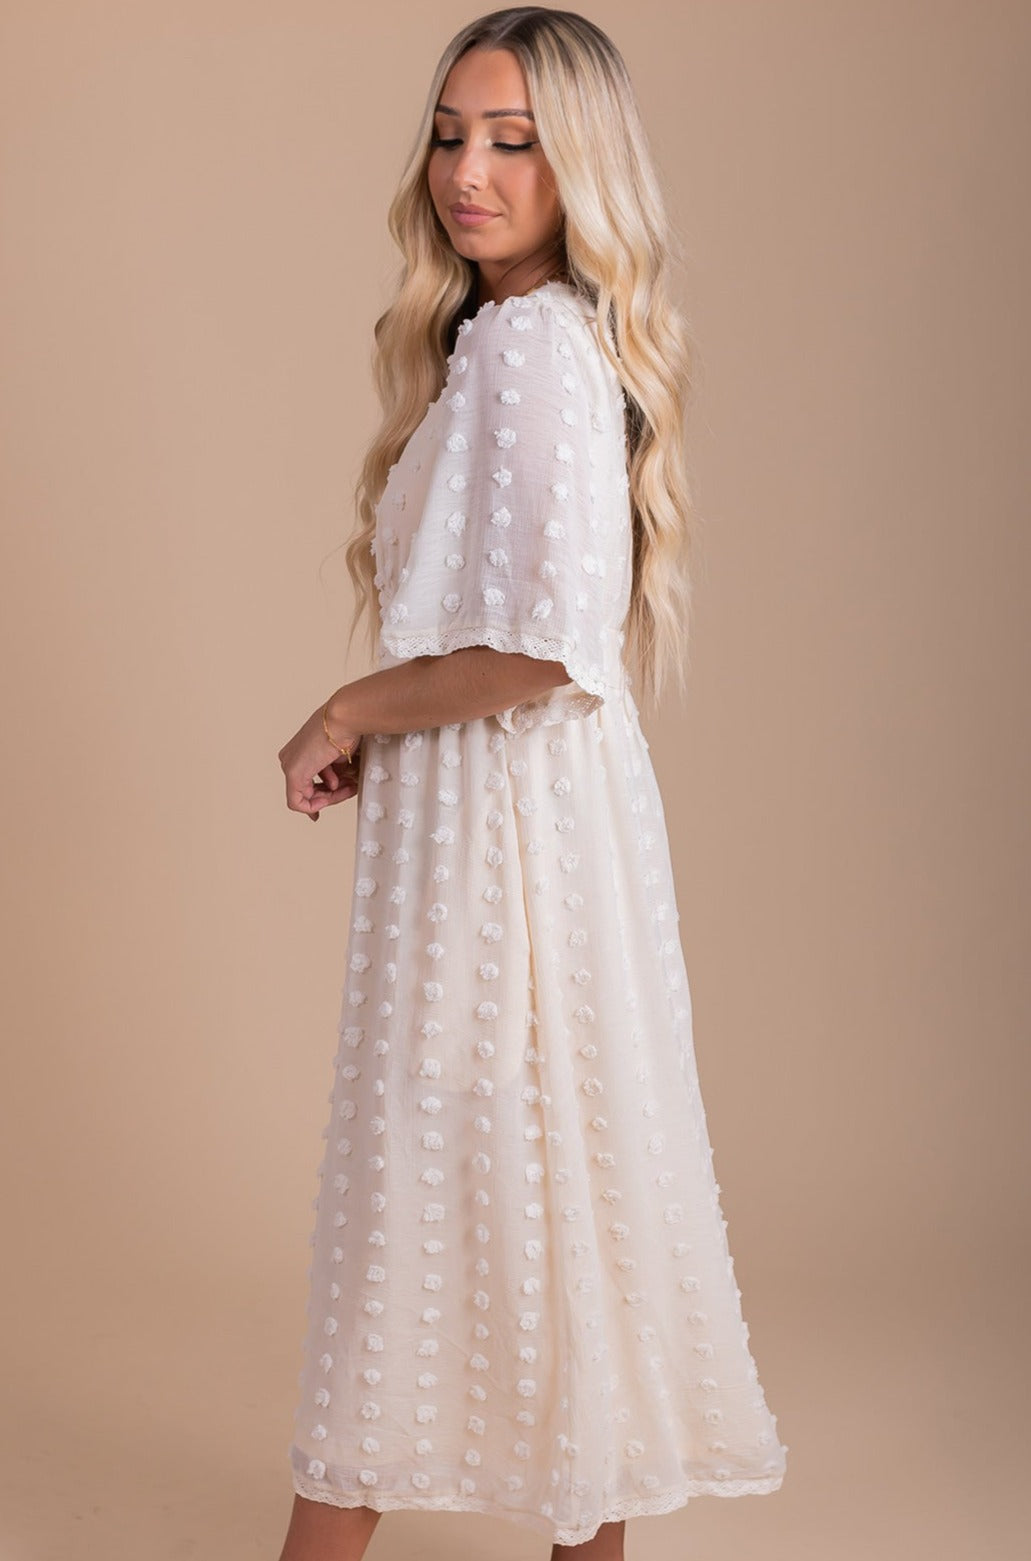 Affordable Textured Dot Dress Midi Length Dress for Women